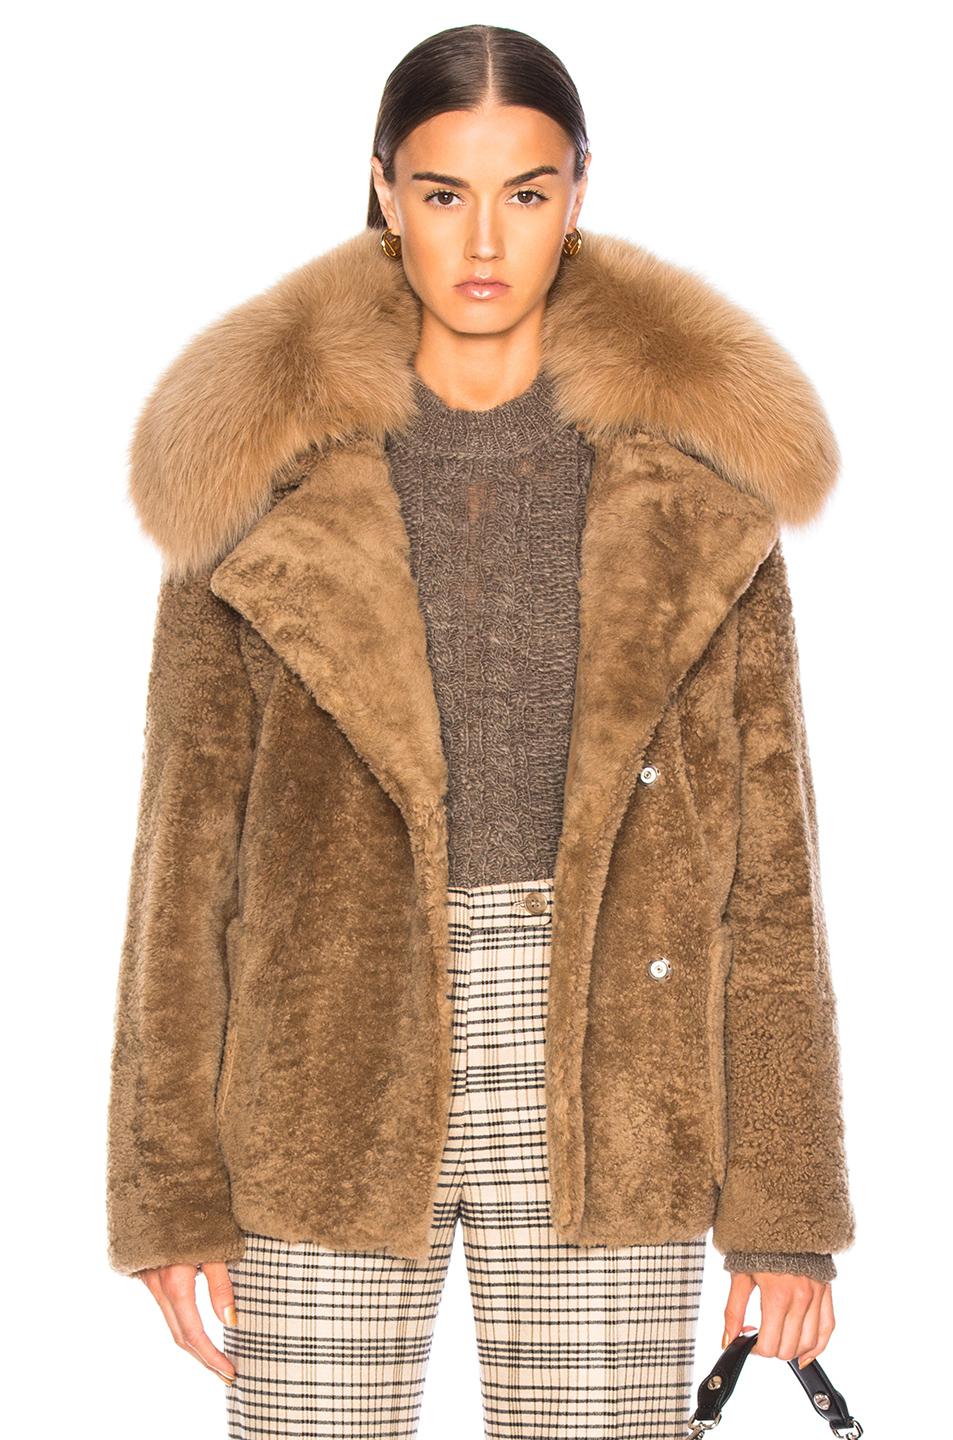 Yves Salomon Curly Merinillo Fur Jacket in Brown - Lyst